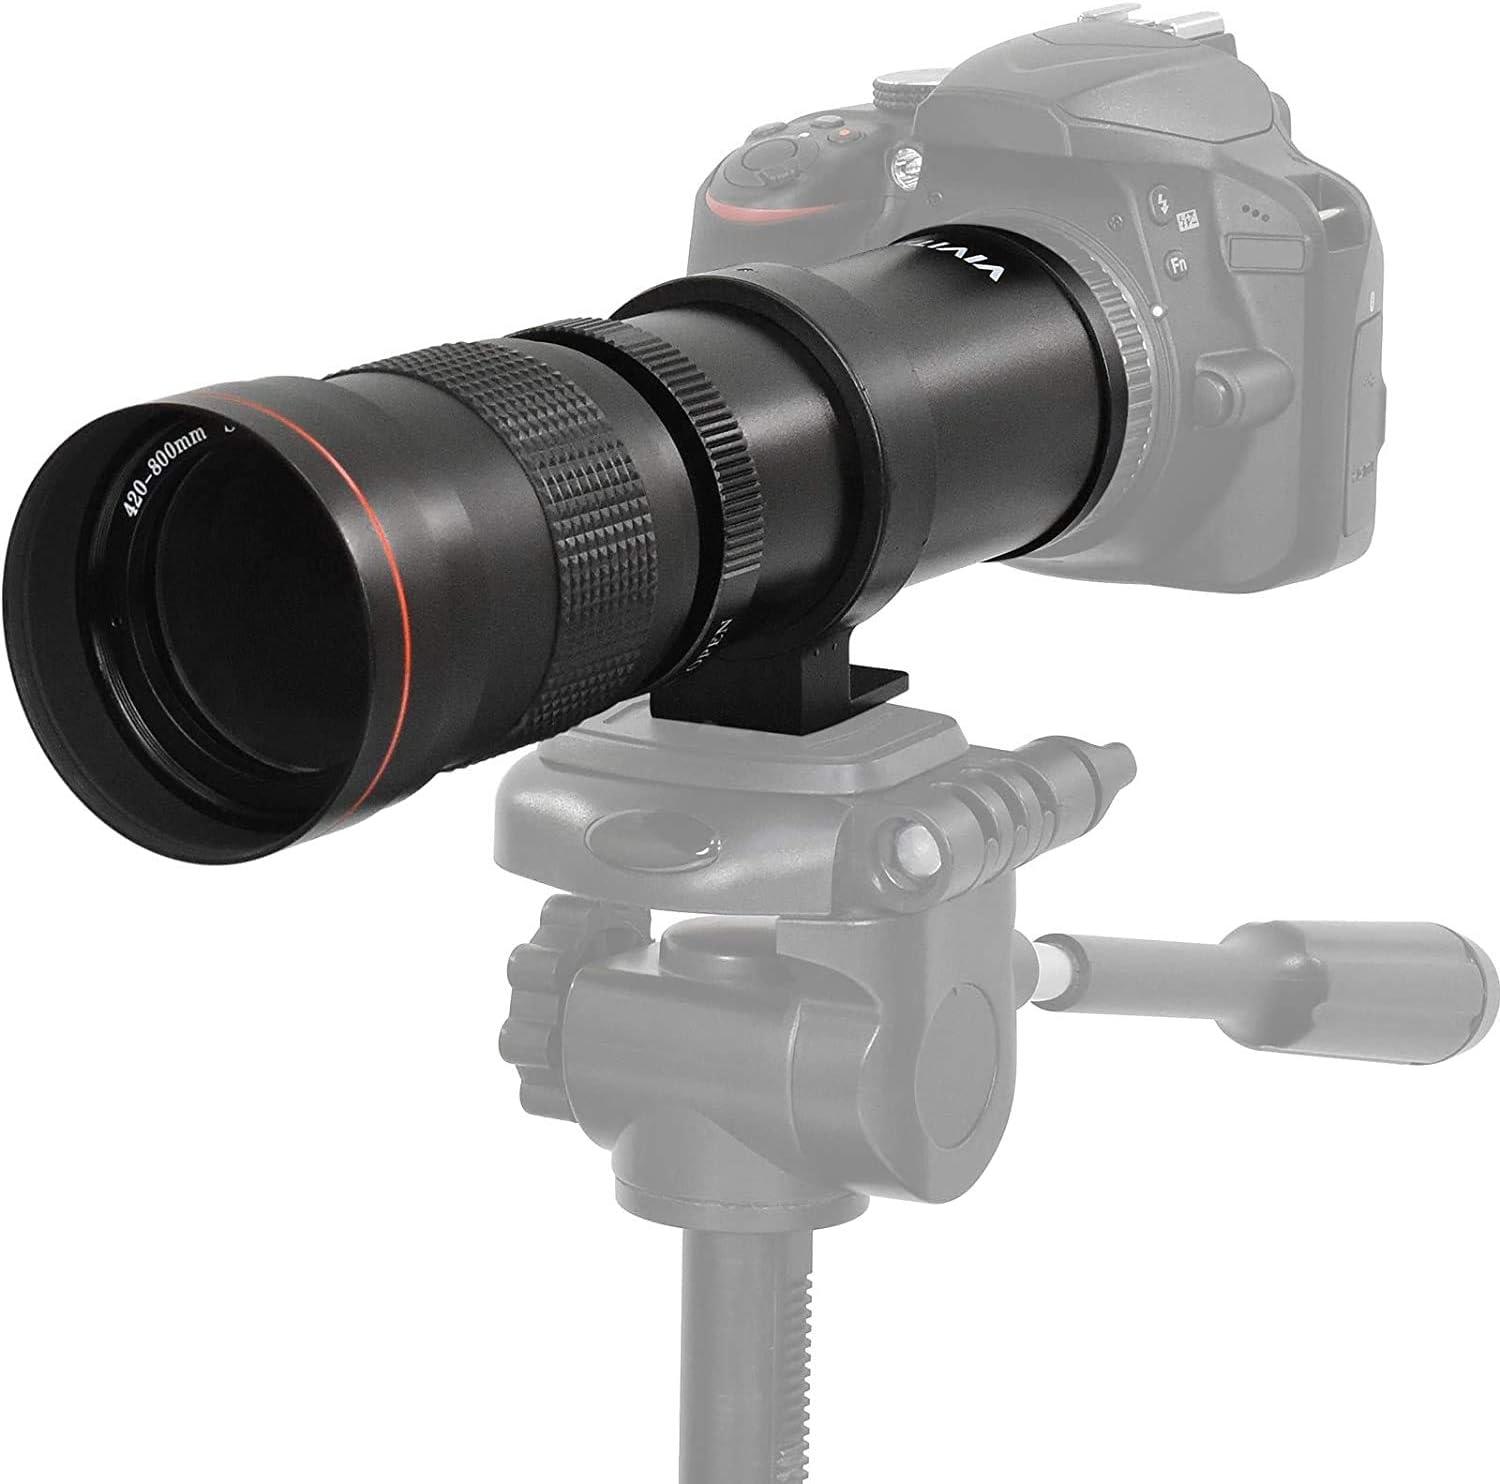  Lightdow Lente de teleobjetivo súper zoom manual de  16.535-31.496 in f/8.3 + anillo de montaje en T para Canon EOS 80D 90D  Rebel T3 T3i T4i T5 T5i T6 T7 T6i